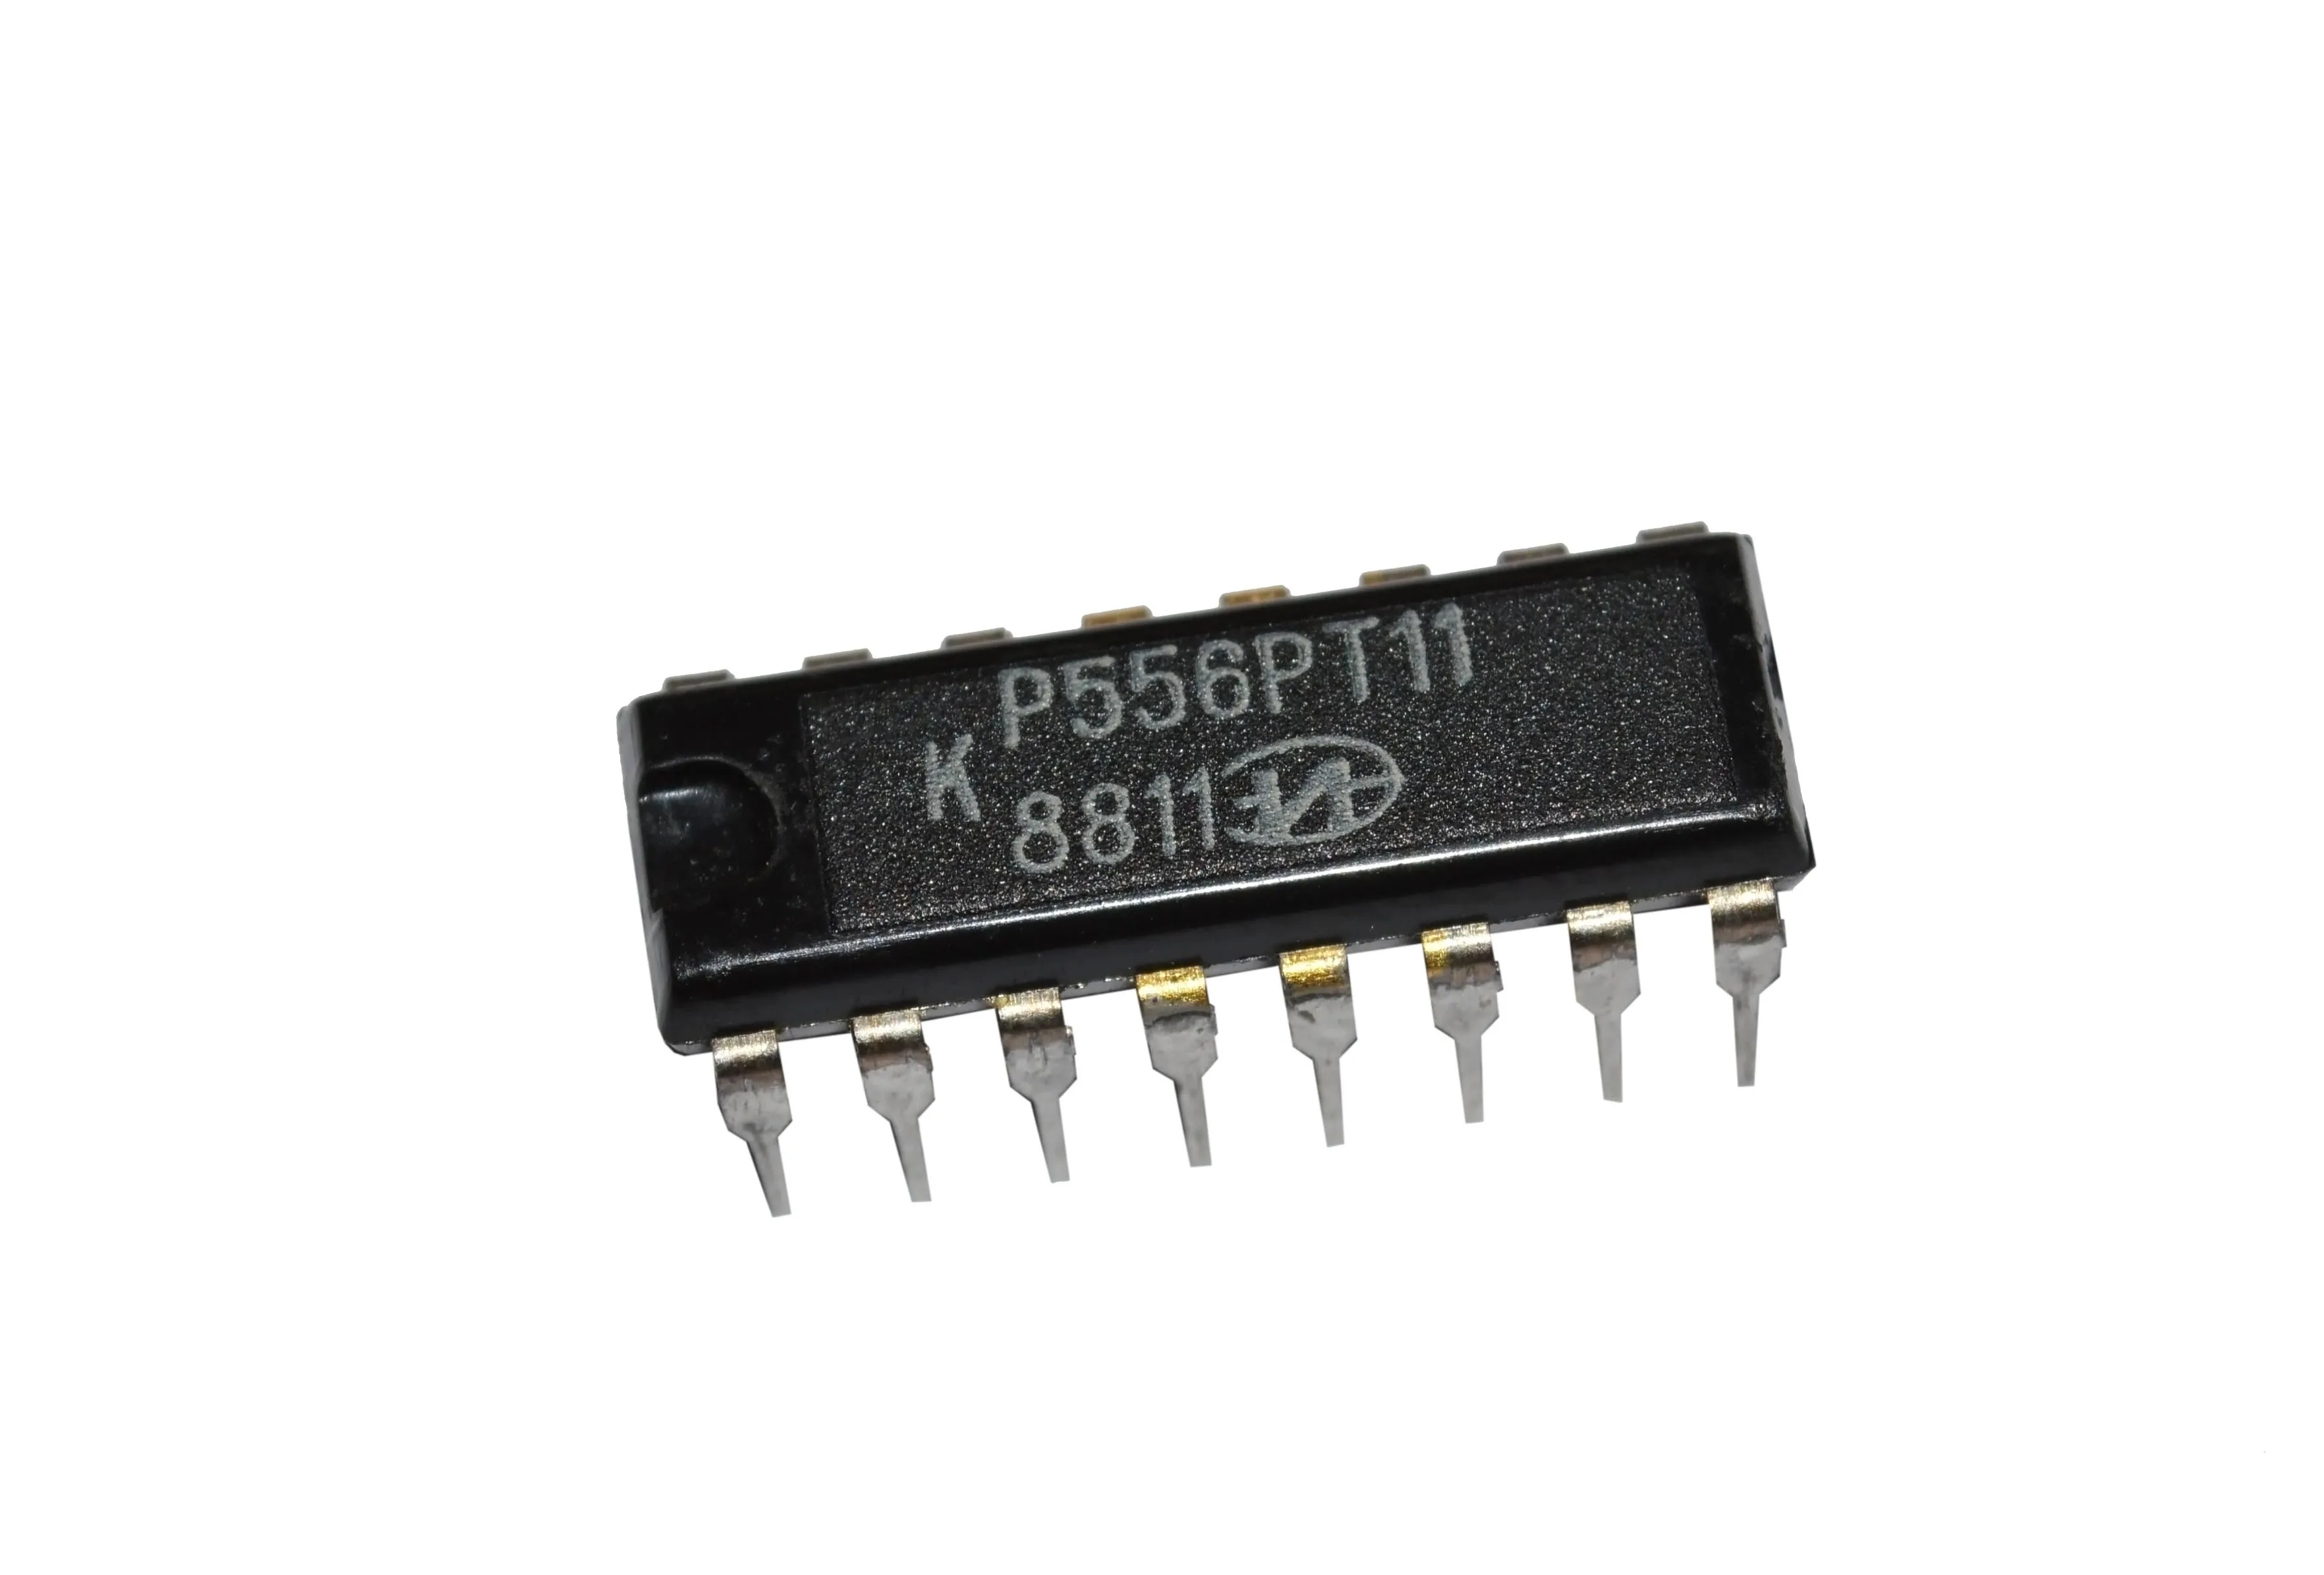 ZX Spectrum ППЗУ КР556РТ11 ФАПЧ для Scorpion Скорпион Z80 Процессор | Электронные компоненты и